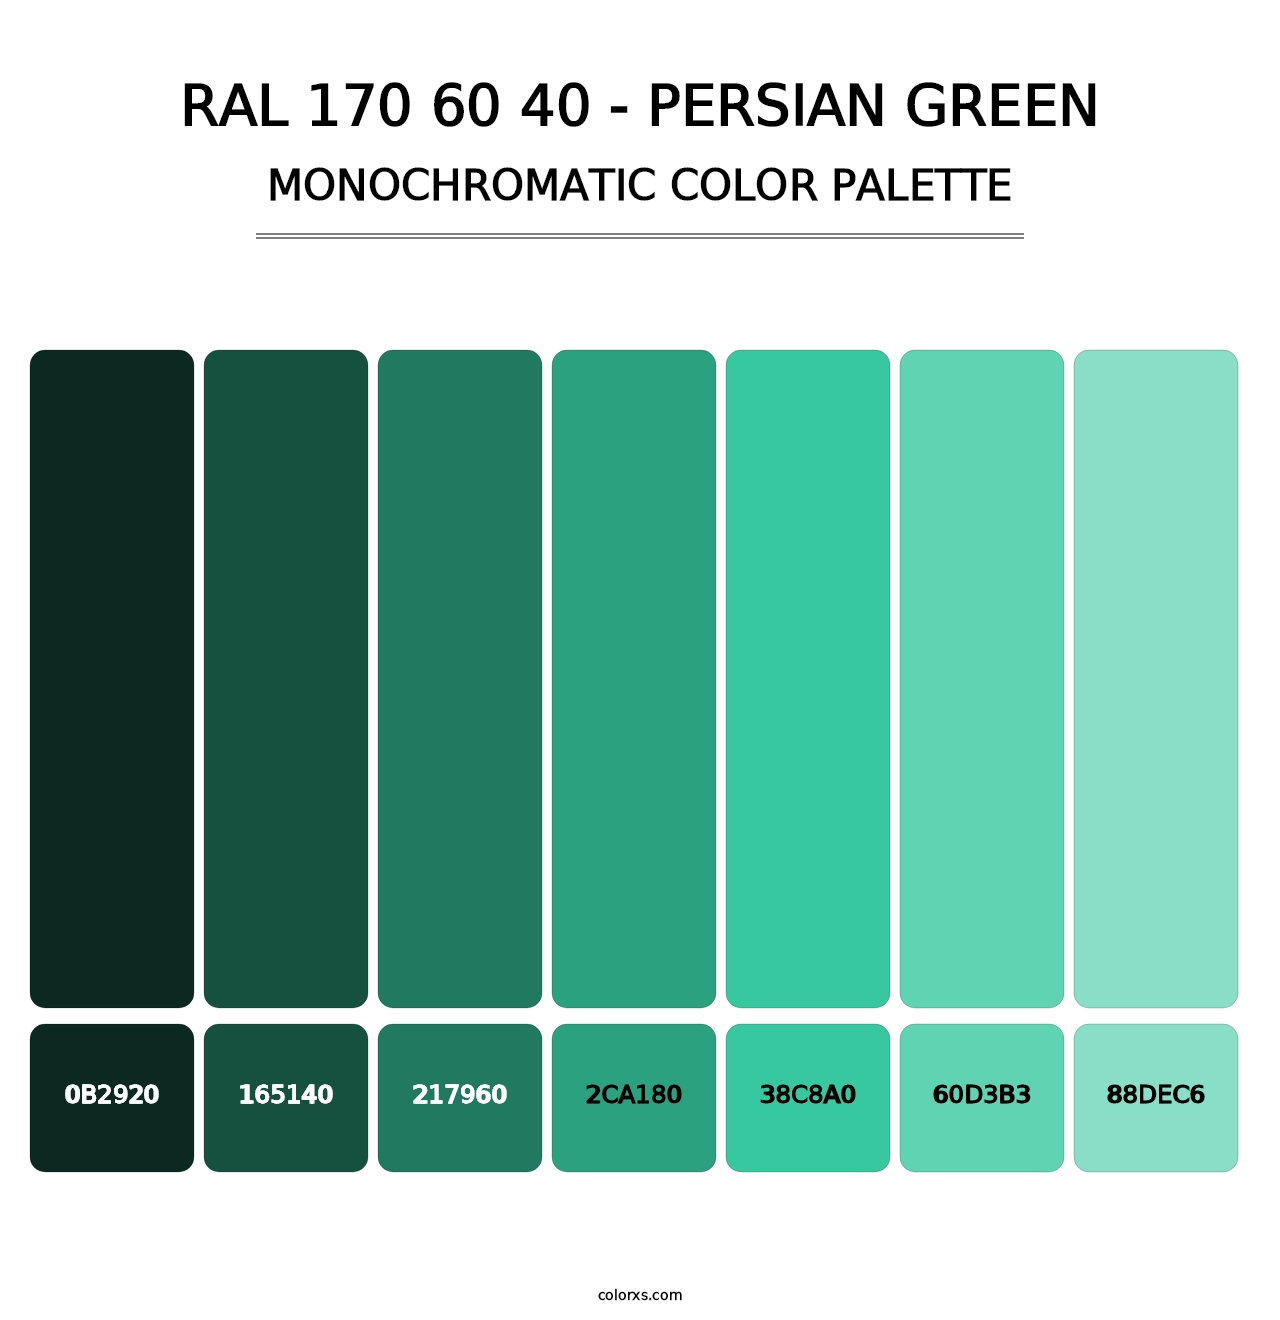 RAL 170 60 40 - Persian Green - Monochromatic Color Palette